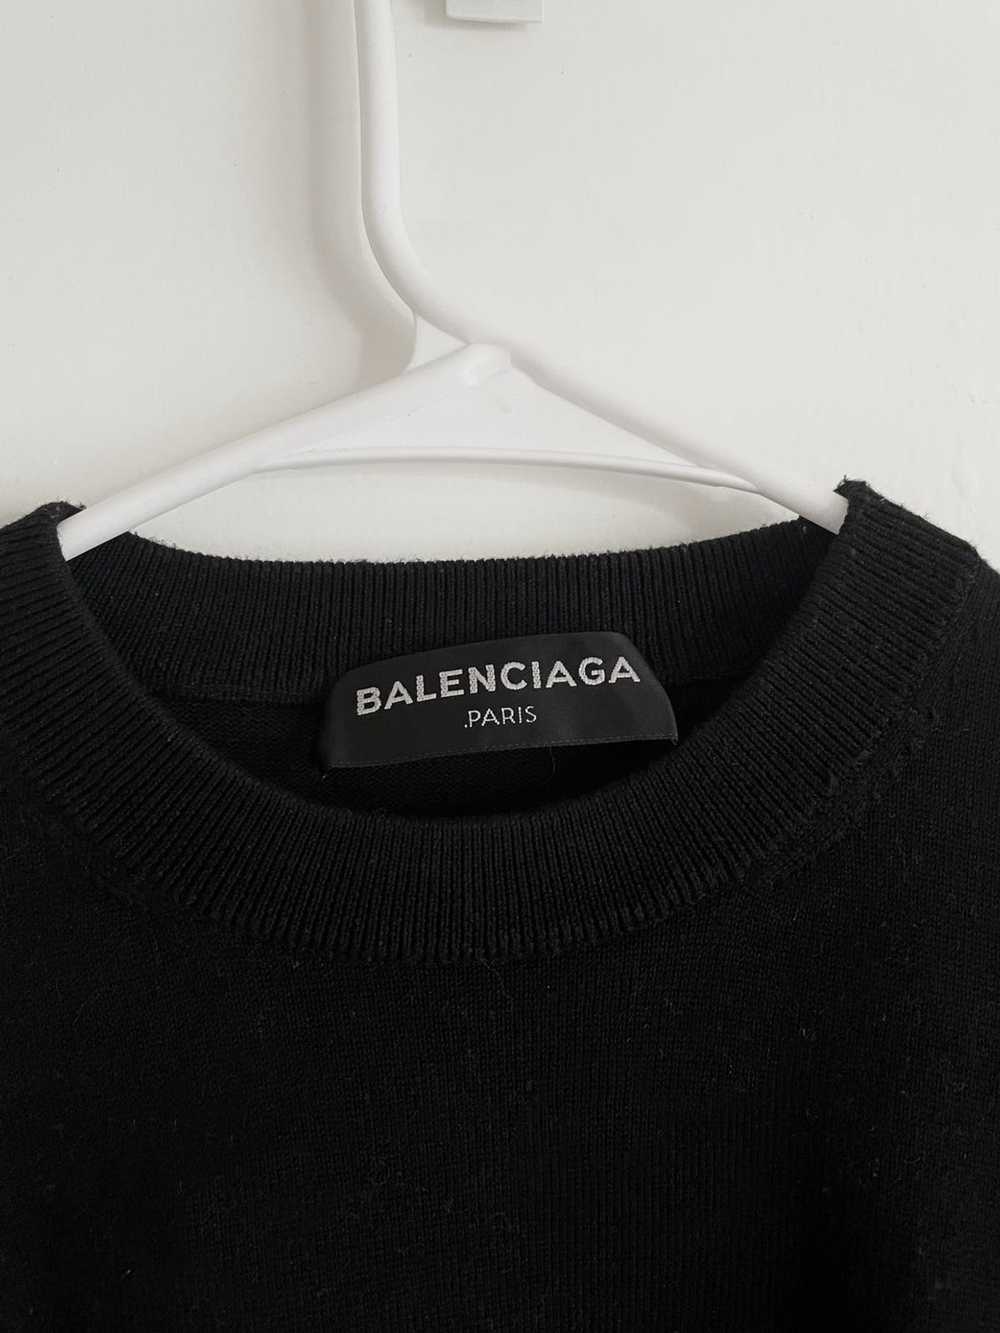 Balenciaga SS17 Cropped Knit Sweater - image 2